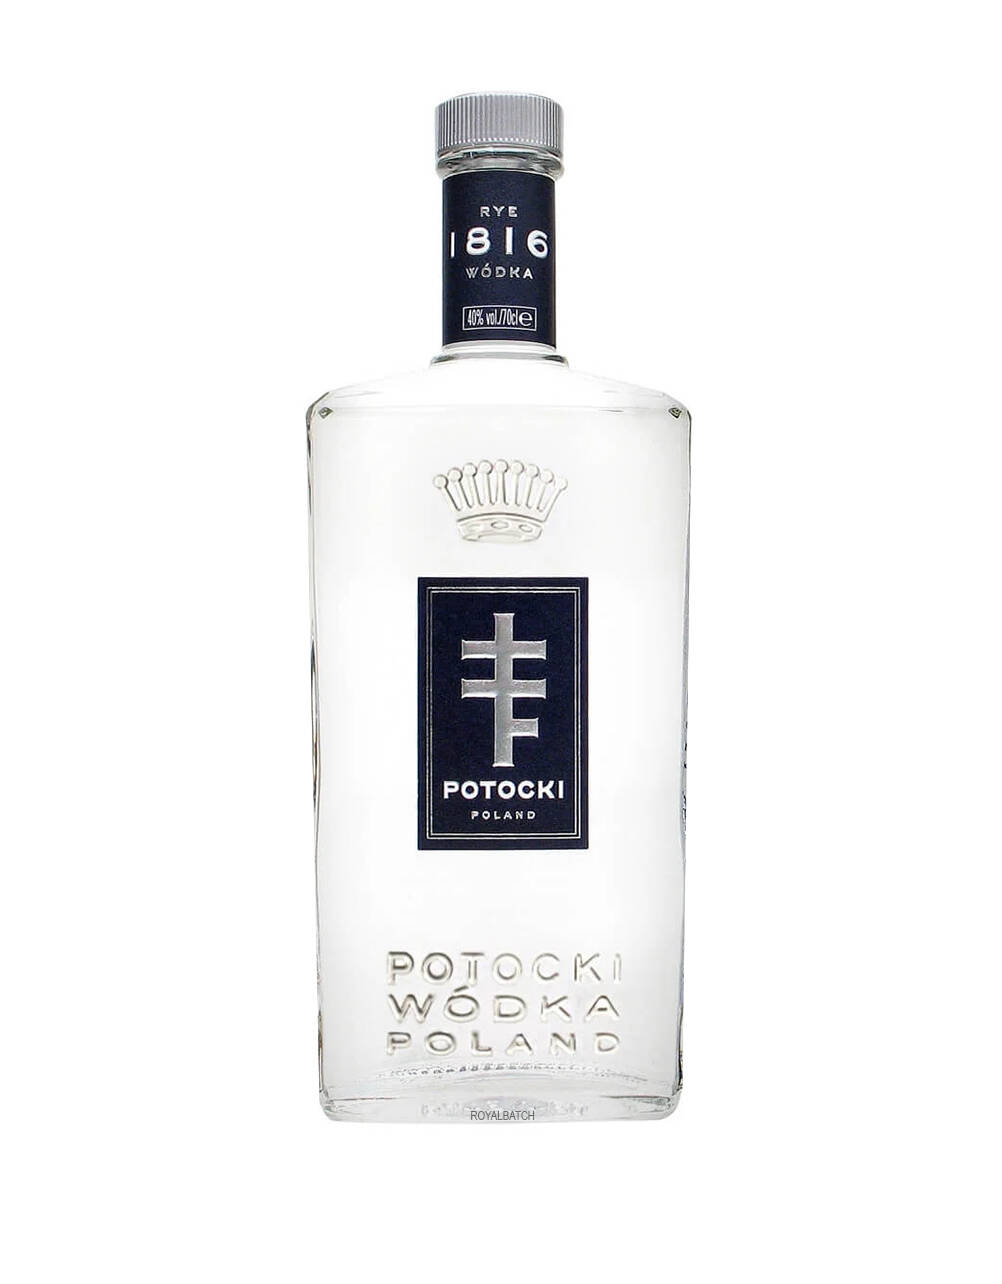 Potocki Poland Vodka